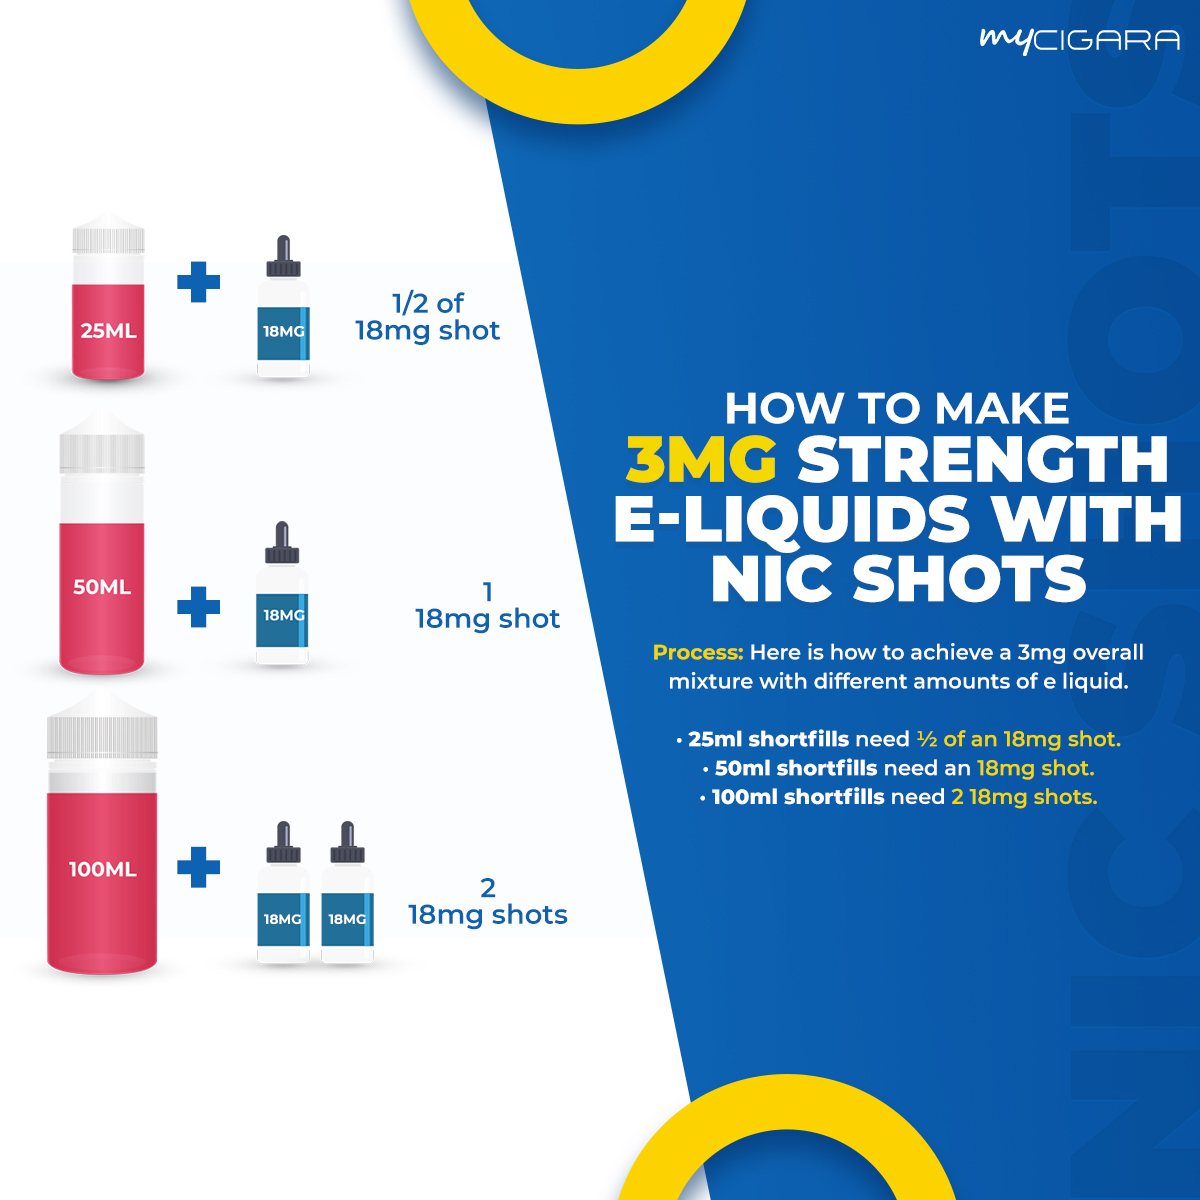 How to Make 3mg Strength E-liquids With Nic Shots